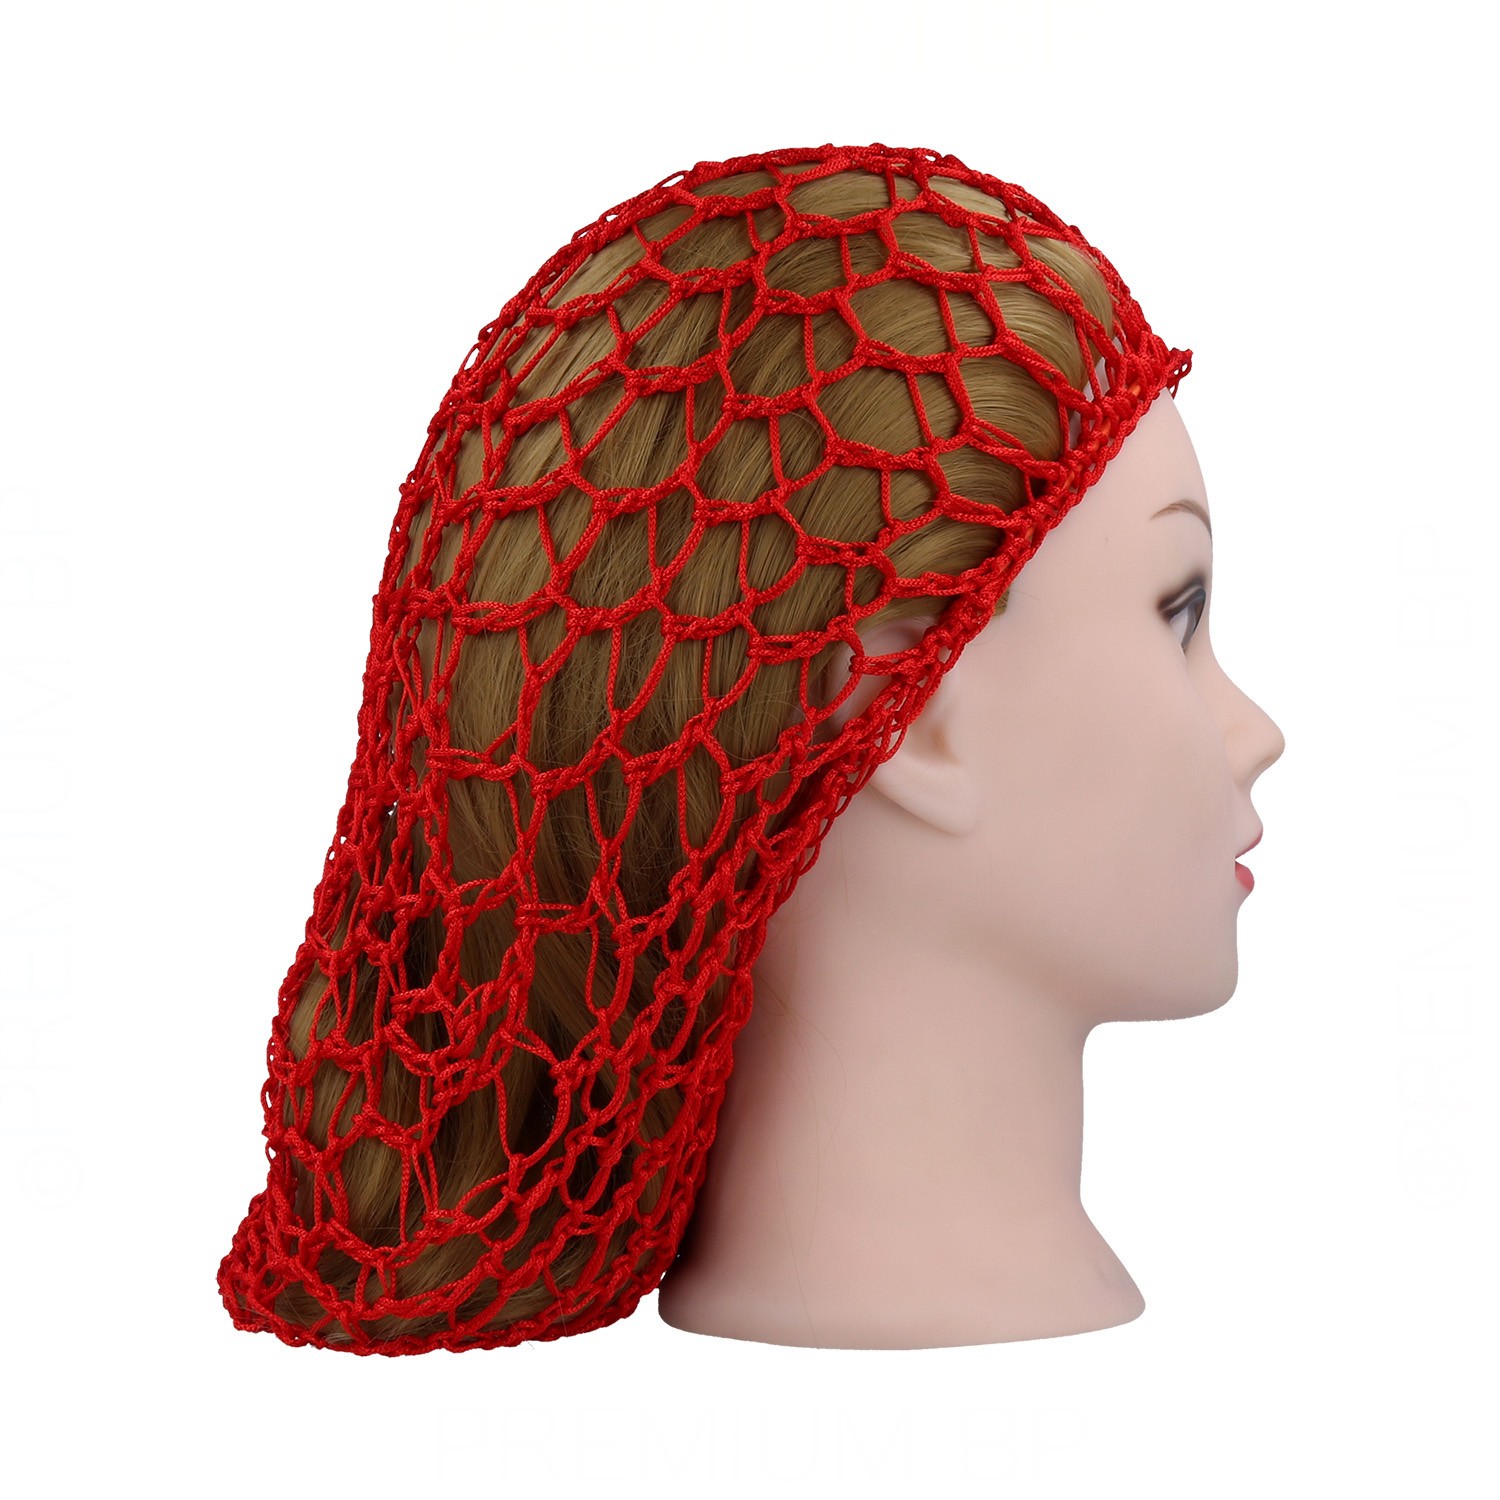 Lb Hair Net Thick 1U (Hnt001-Rojo)